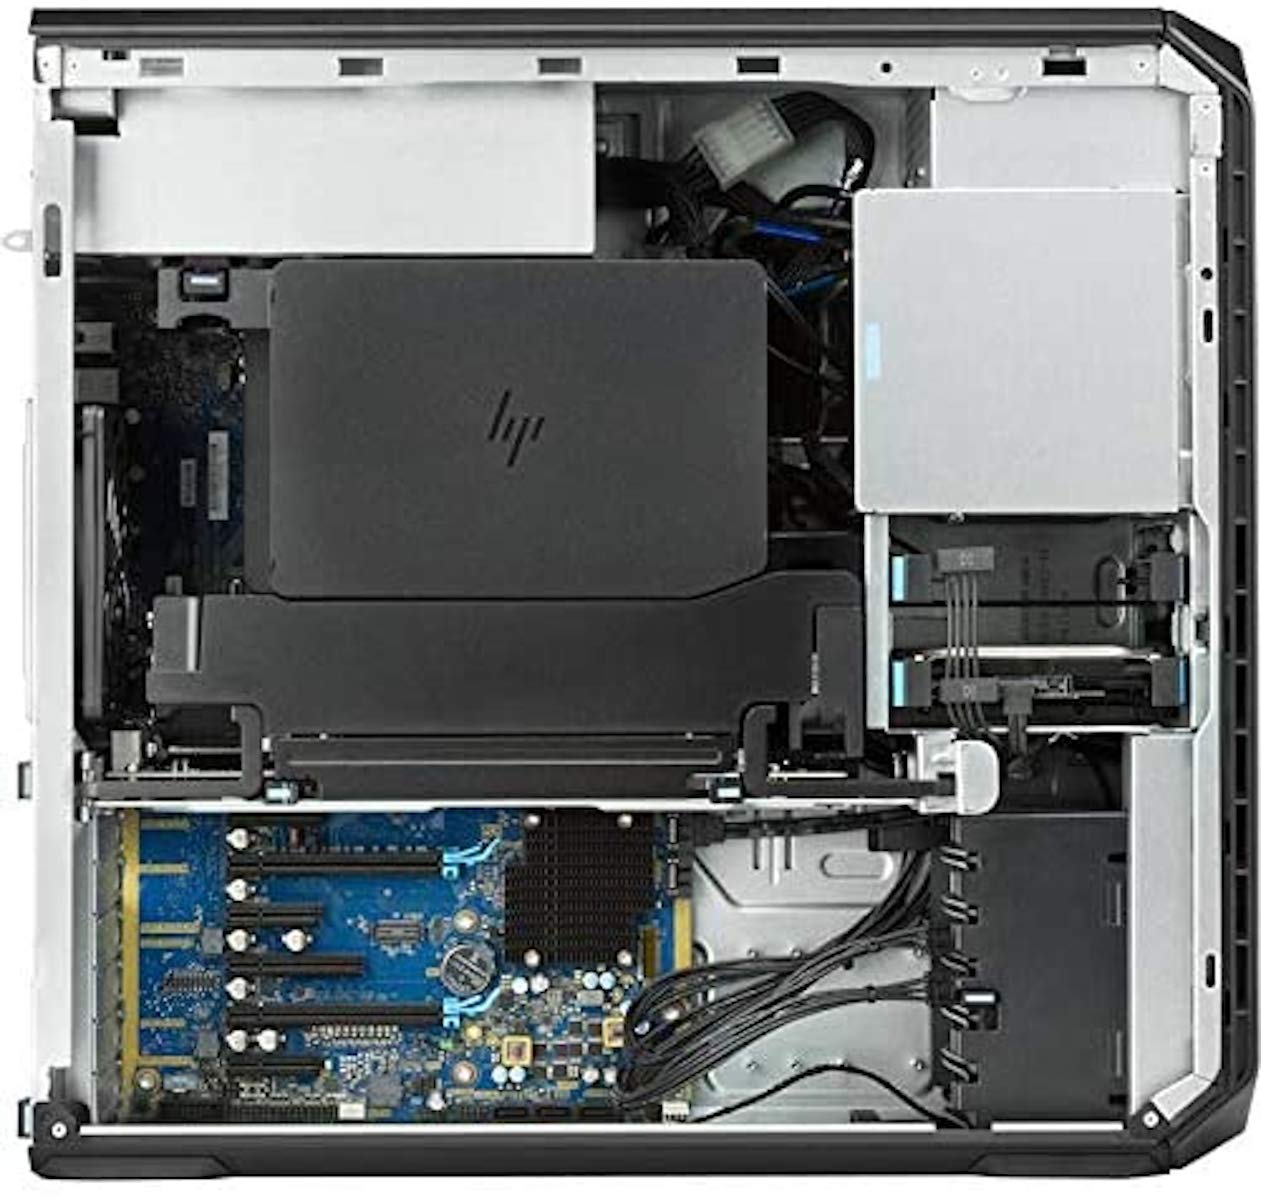 HP Z6 G4 Workstation, 2X Intel Xeon Silver 4108 (16-Cores) up to 3.0GHz, 32GB DDR4, 512GB NVMe M.2 SSD + 2TB HDD, Nvidia Quadro P1000 4GB, Windows 10 Pro (Renewed)